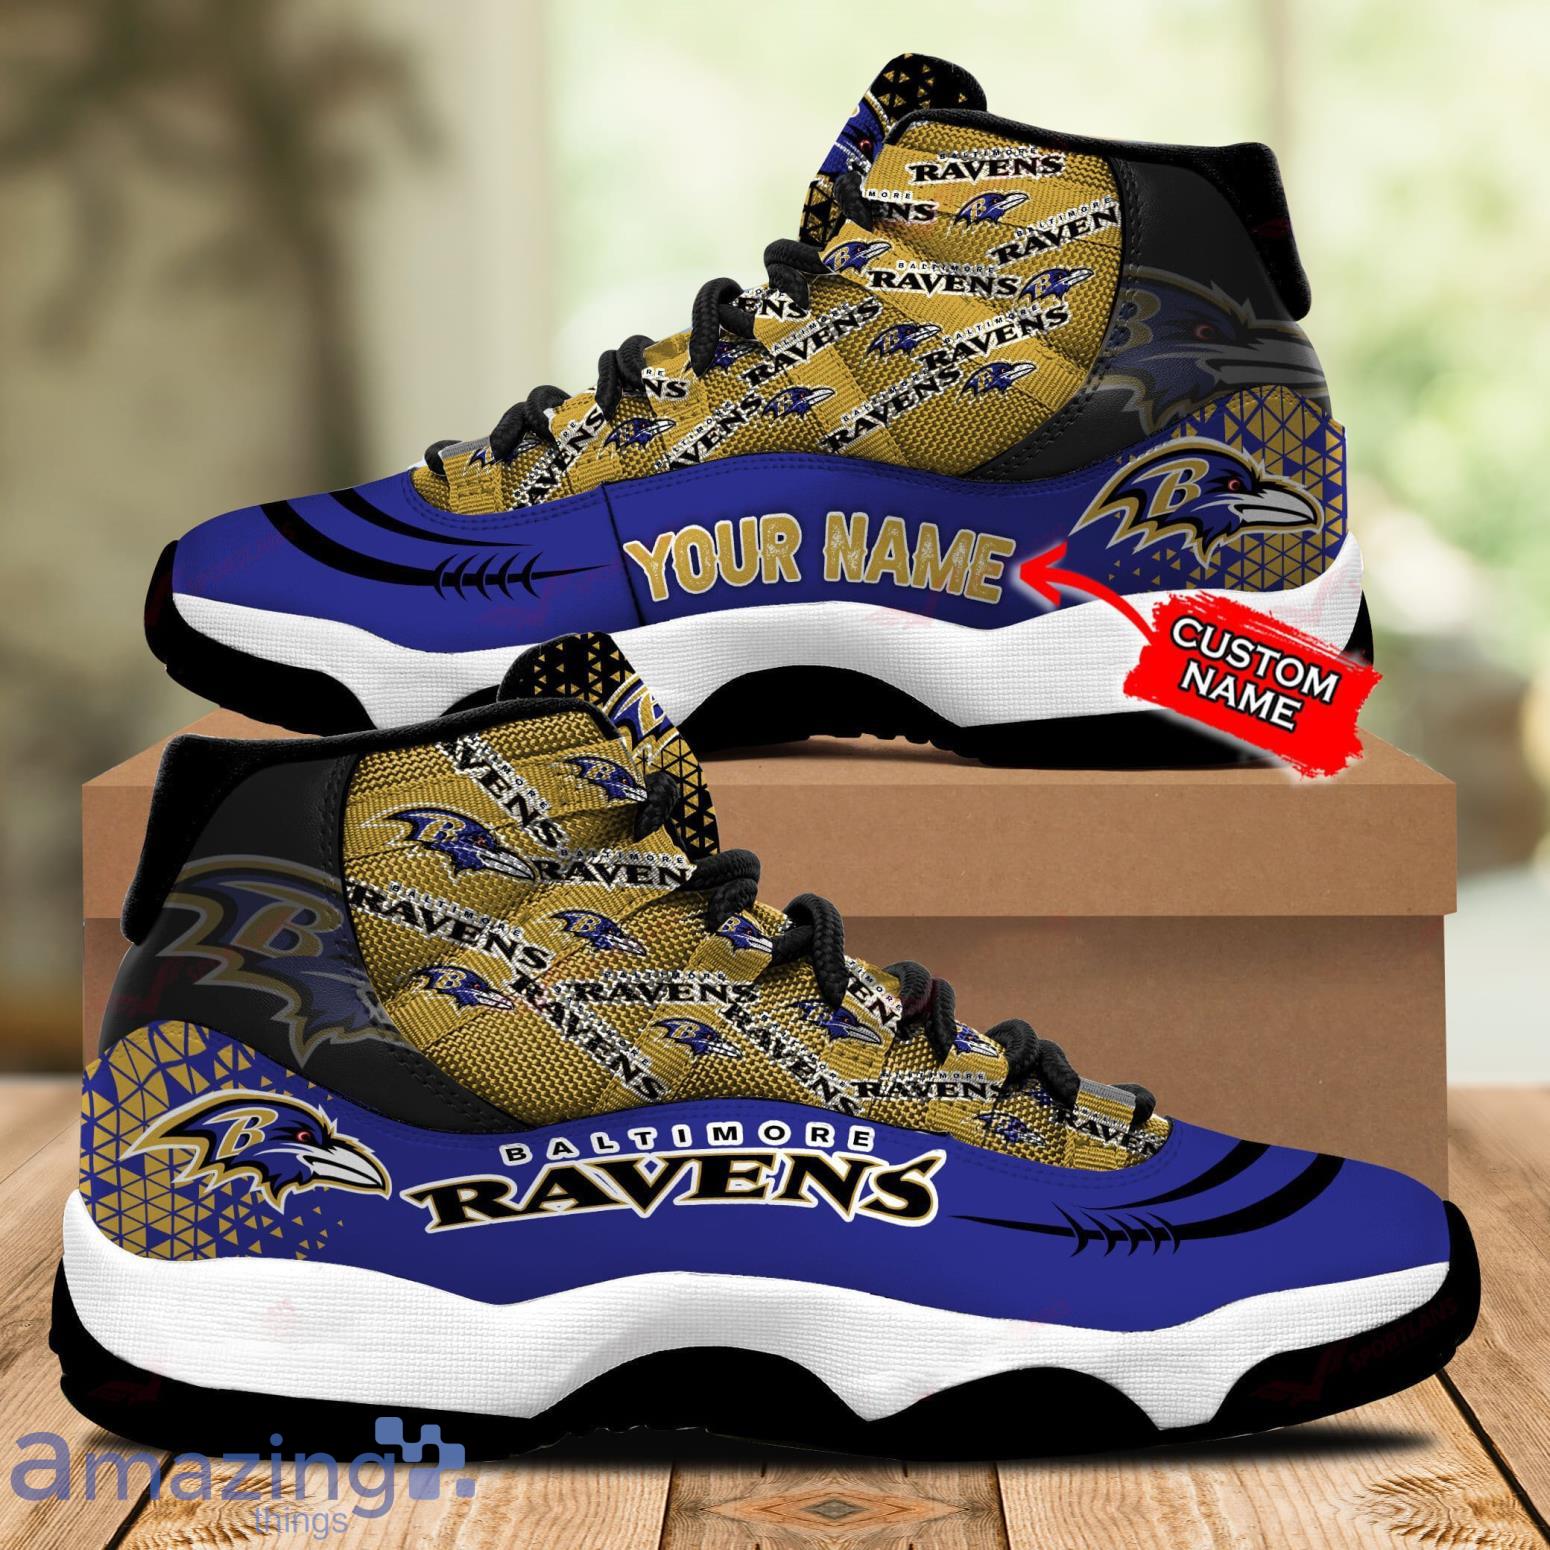 Baltimore Ravens Custom Name Air Jordan 11 Sneaker Shoes For Sport Fans -  Banantees